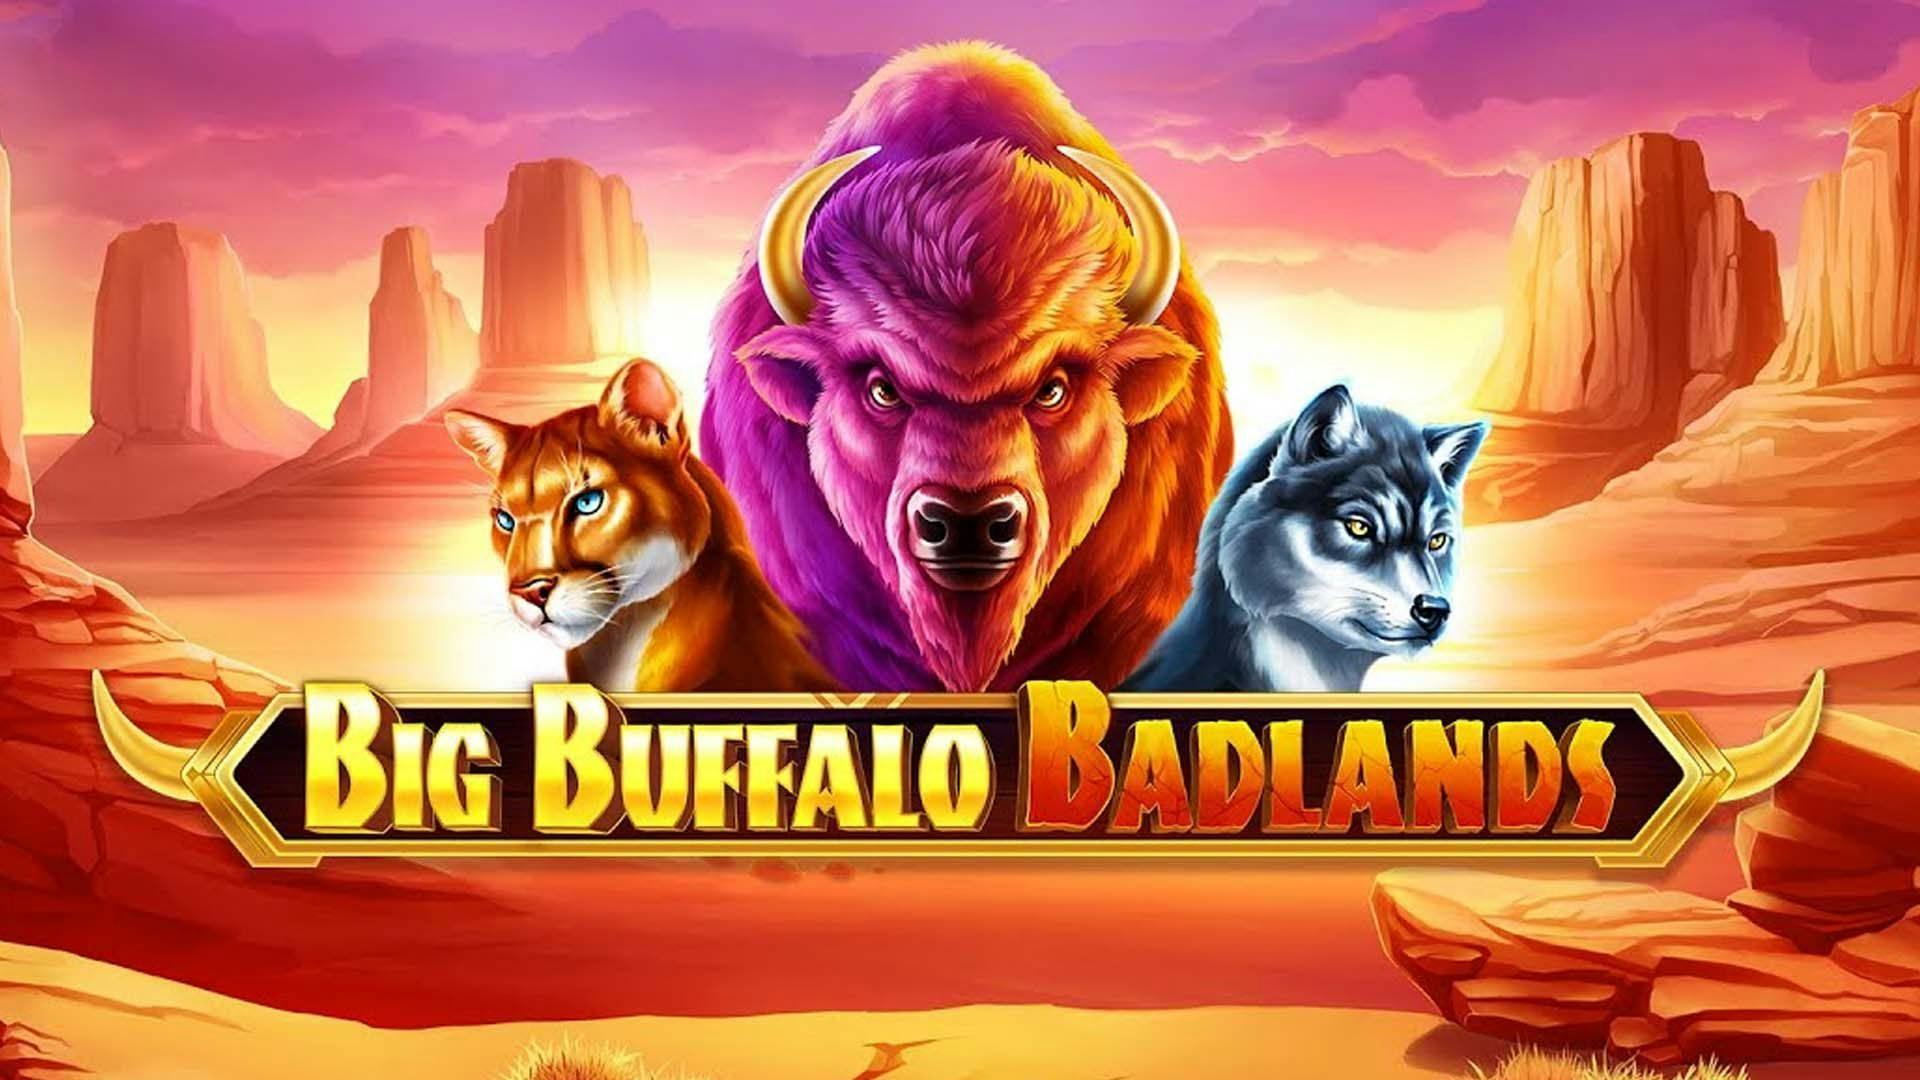 Big Buffalo Badlands Slot Machine Online Free Game Play